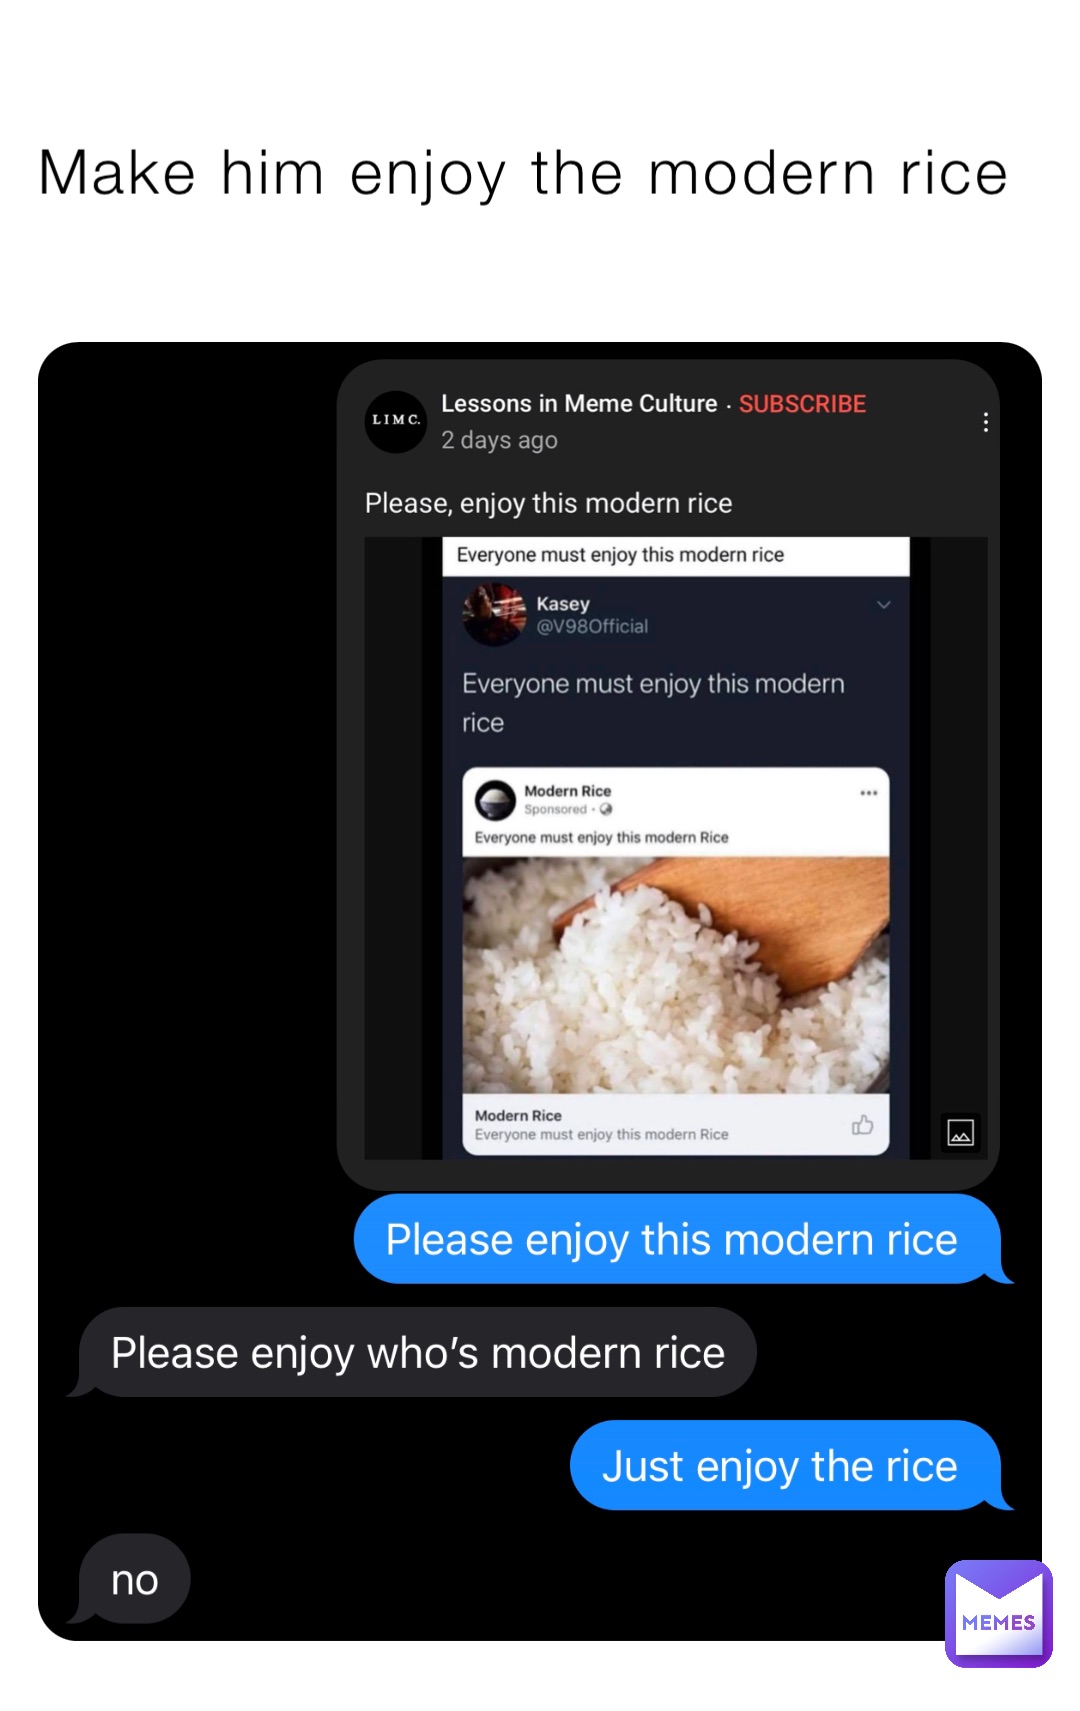 Make him enjoy the modern rice